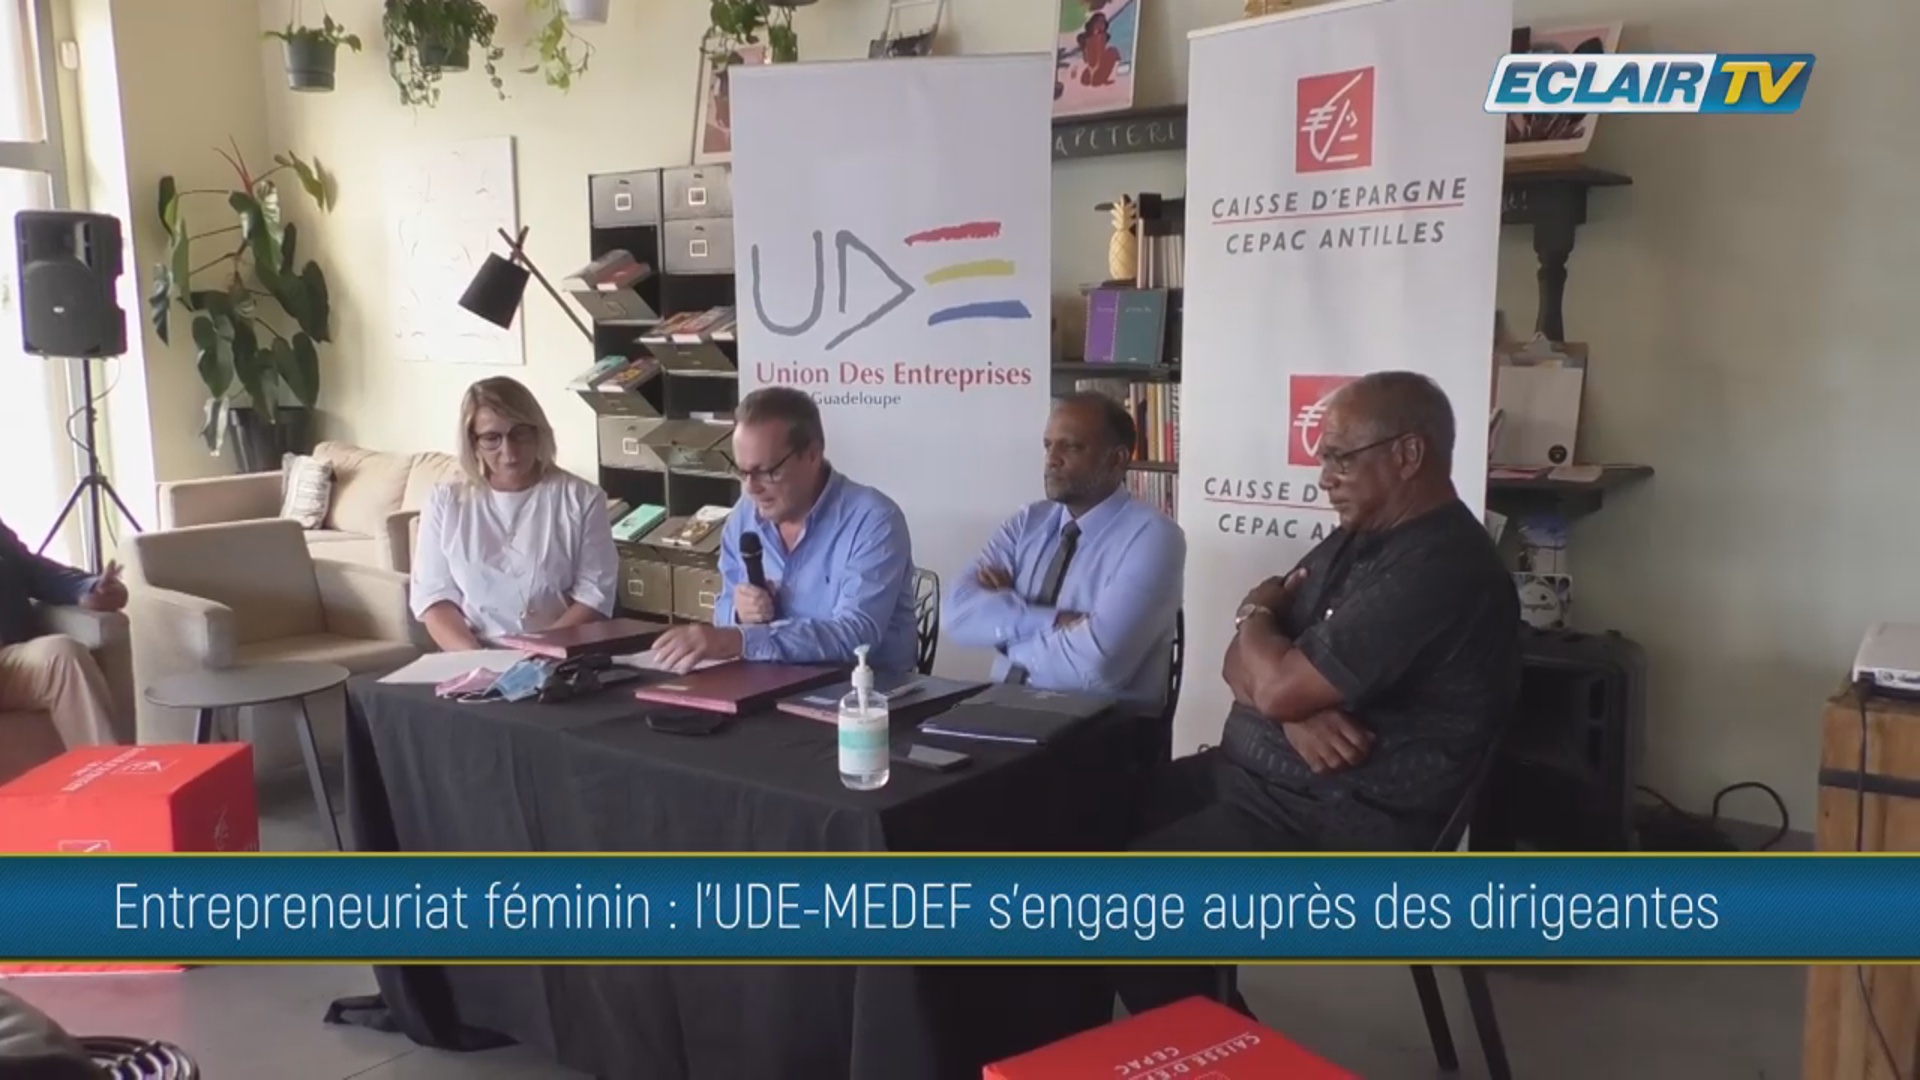 [Vidéo] Onews Guadeloupe. Flash info avec Eclair tv